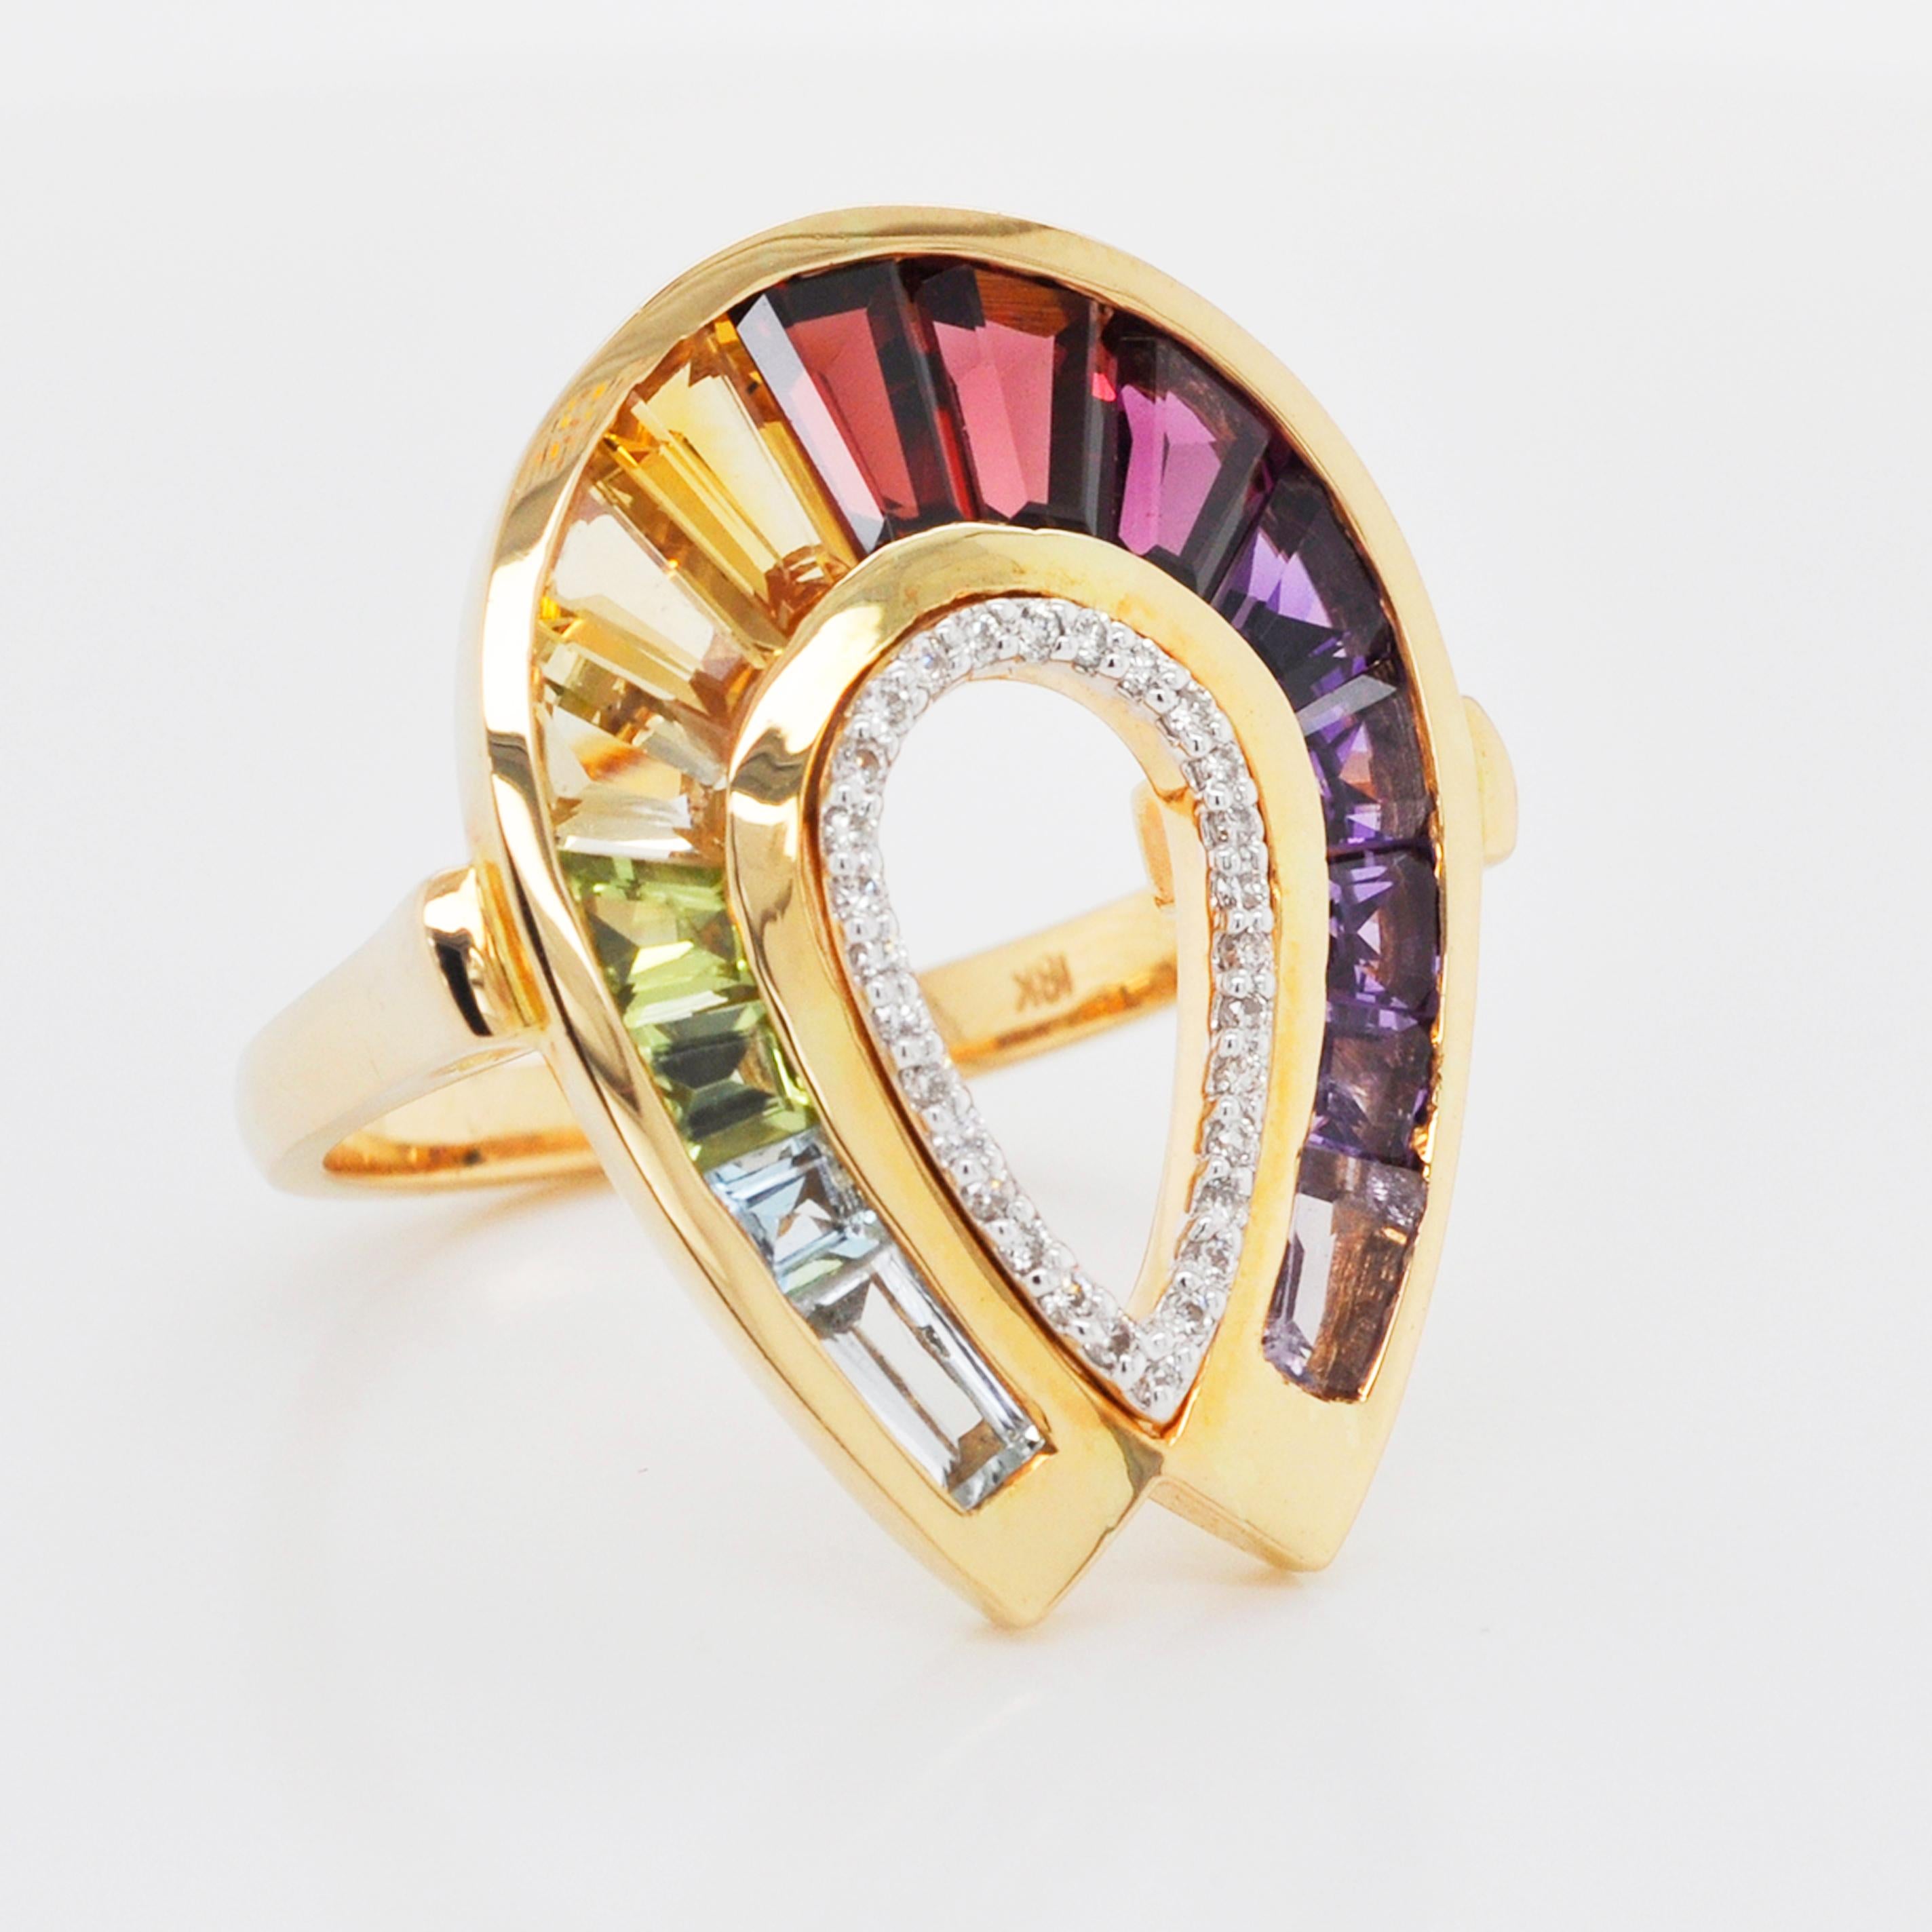 For Sale:  18 Karat Gold Channel Set Baguette Rainbow Gemstones Doorknocker Diamond Ring 10